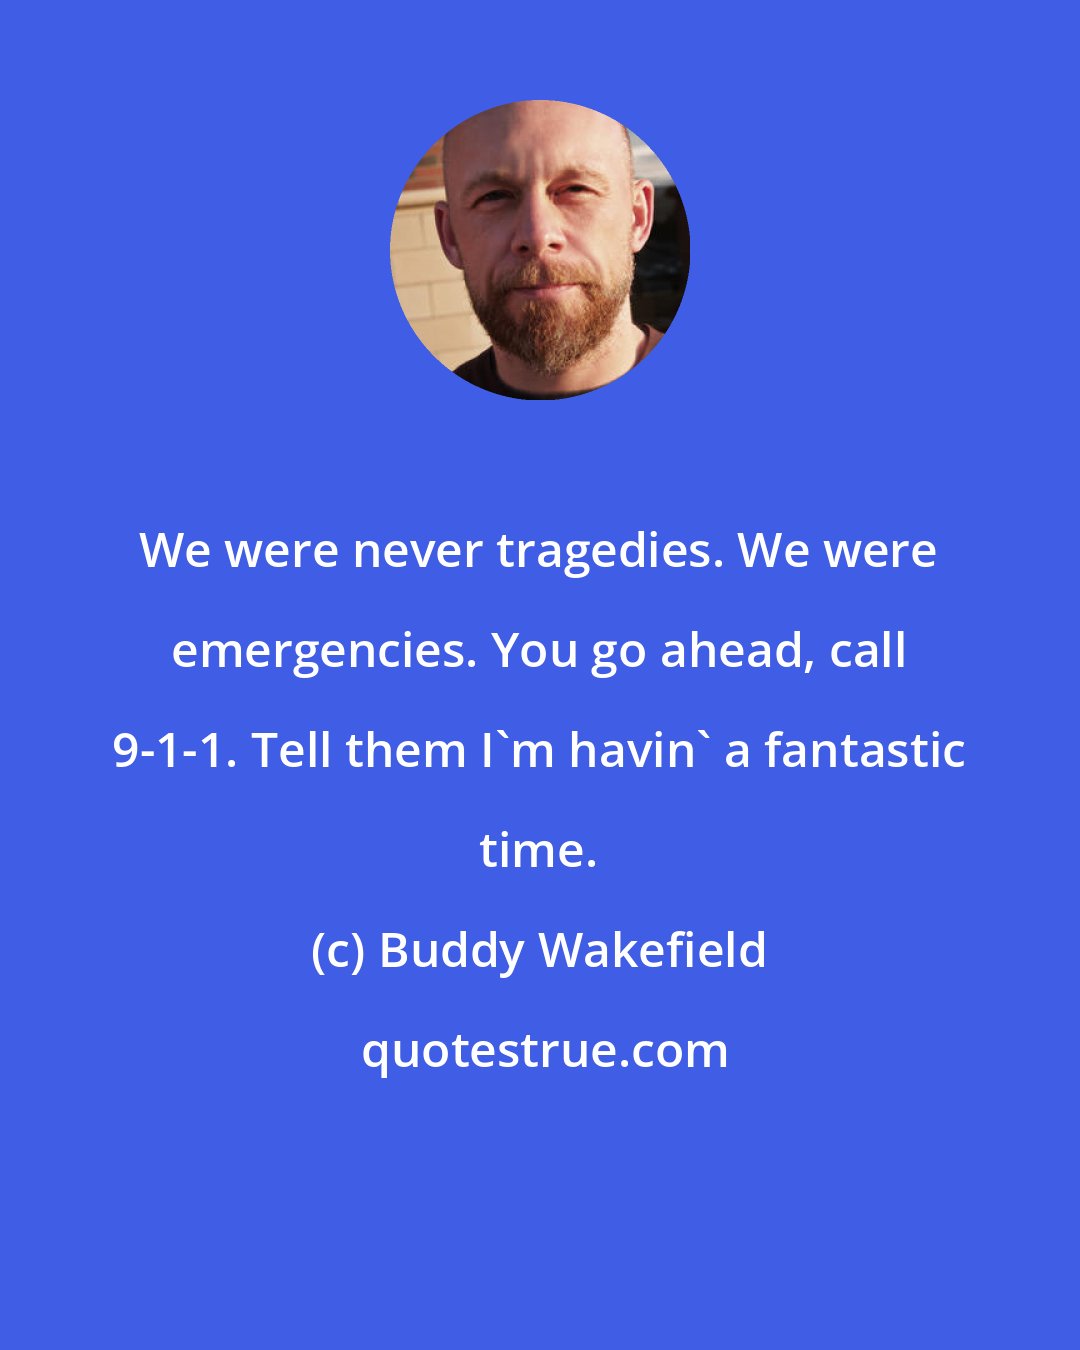 Buddy Wakefield: We were never tragedies. We were emergencies. You go ahead, call 9-1-1. Tell them I'm havin' a fantastic time.